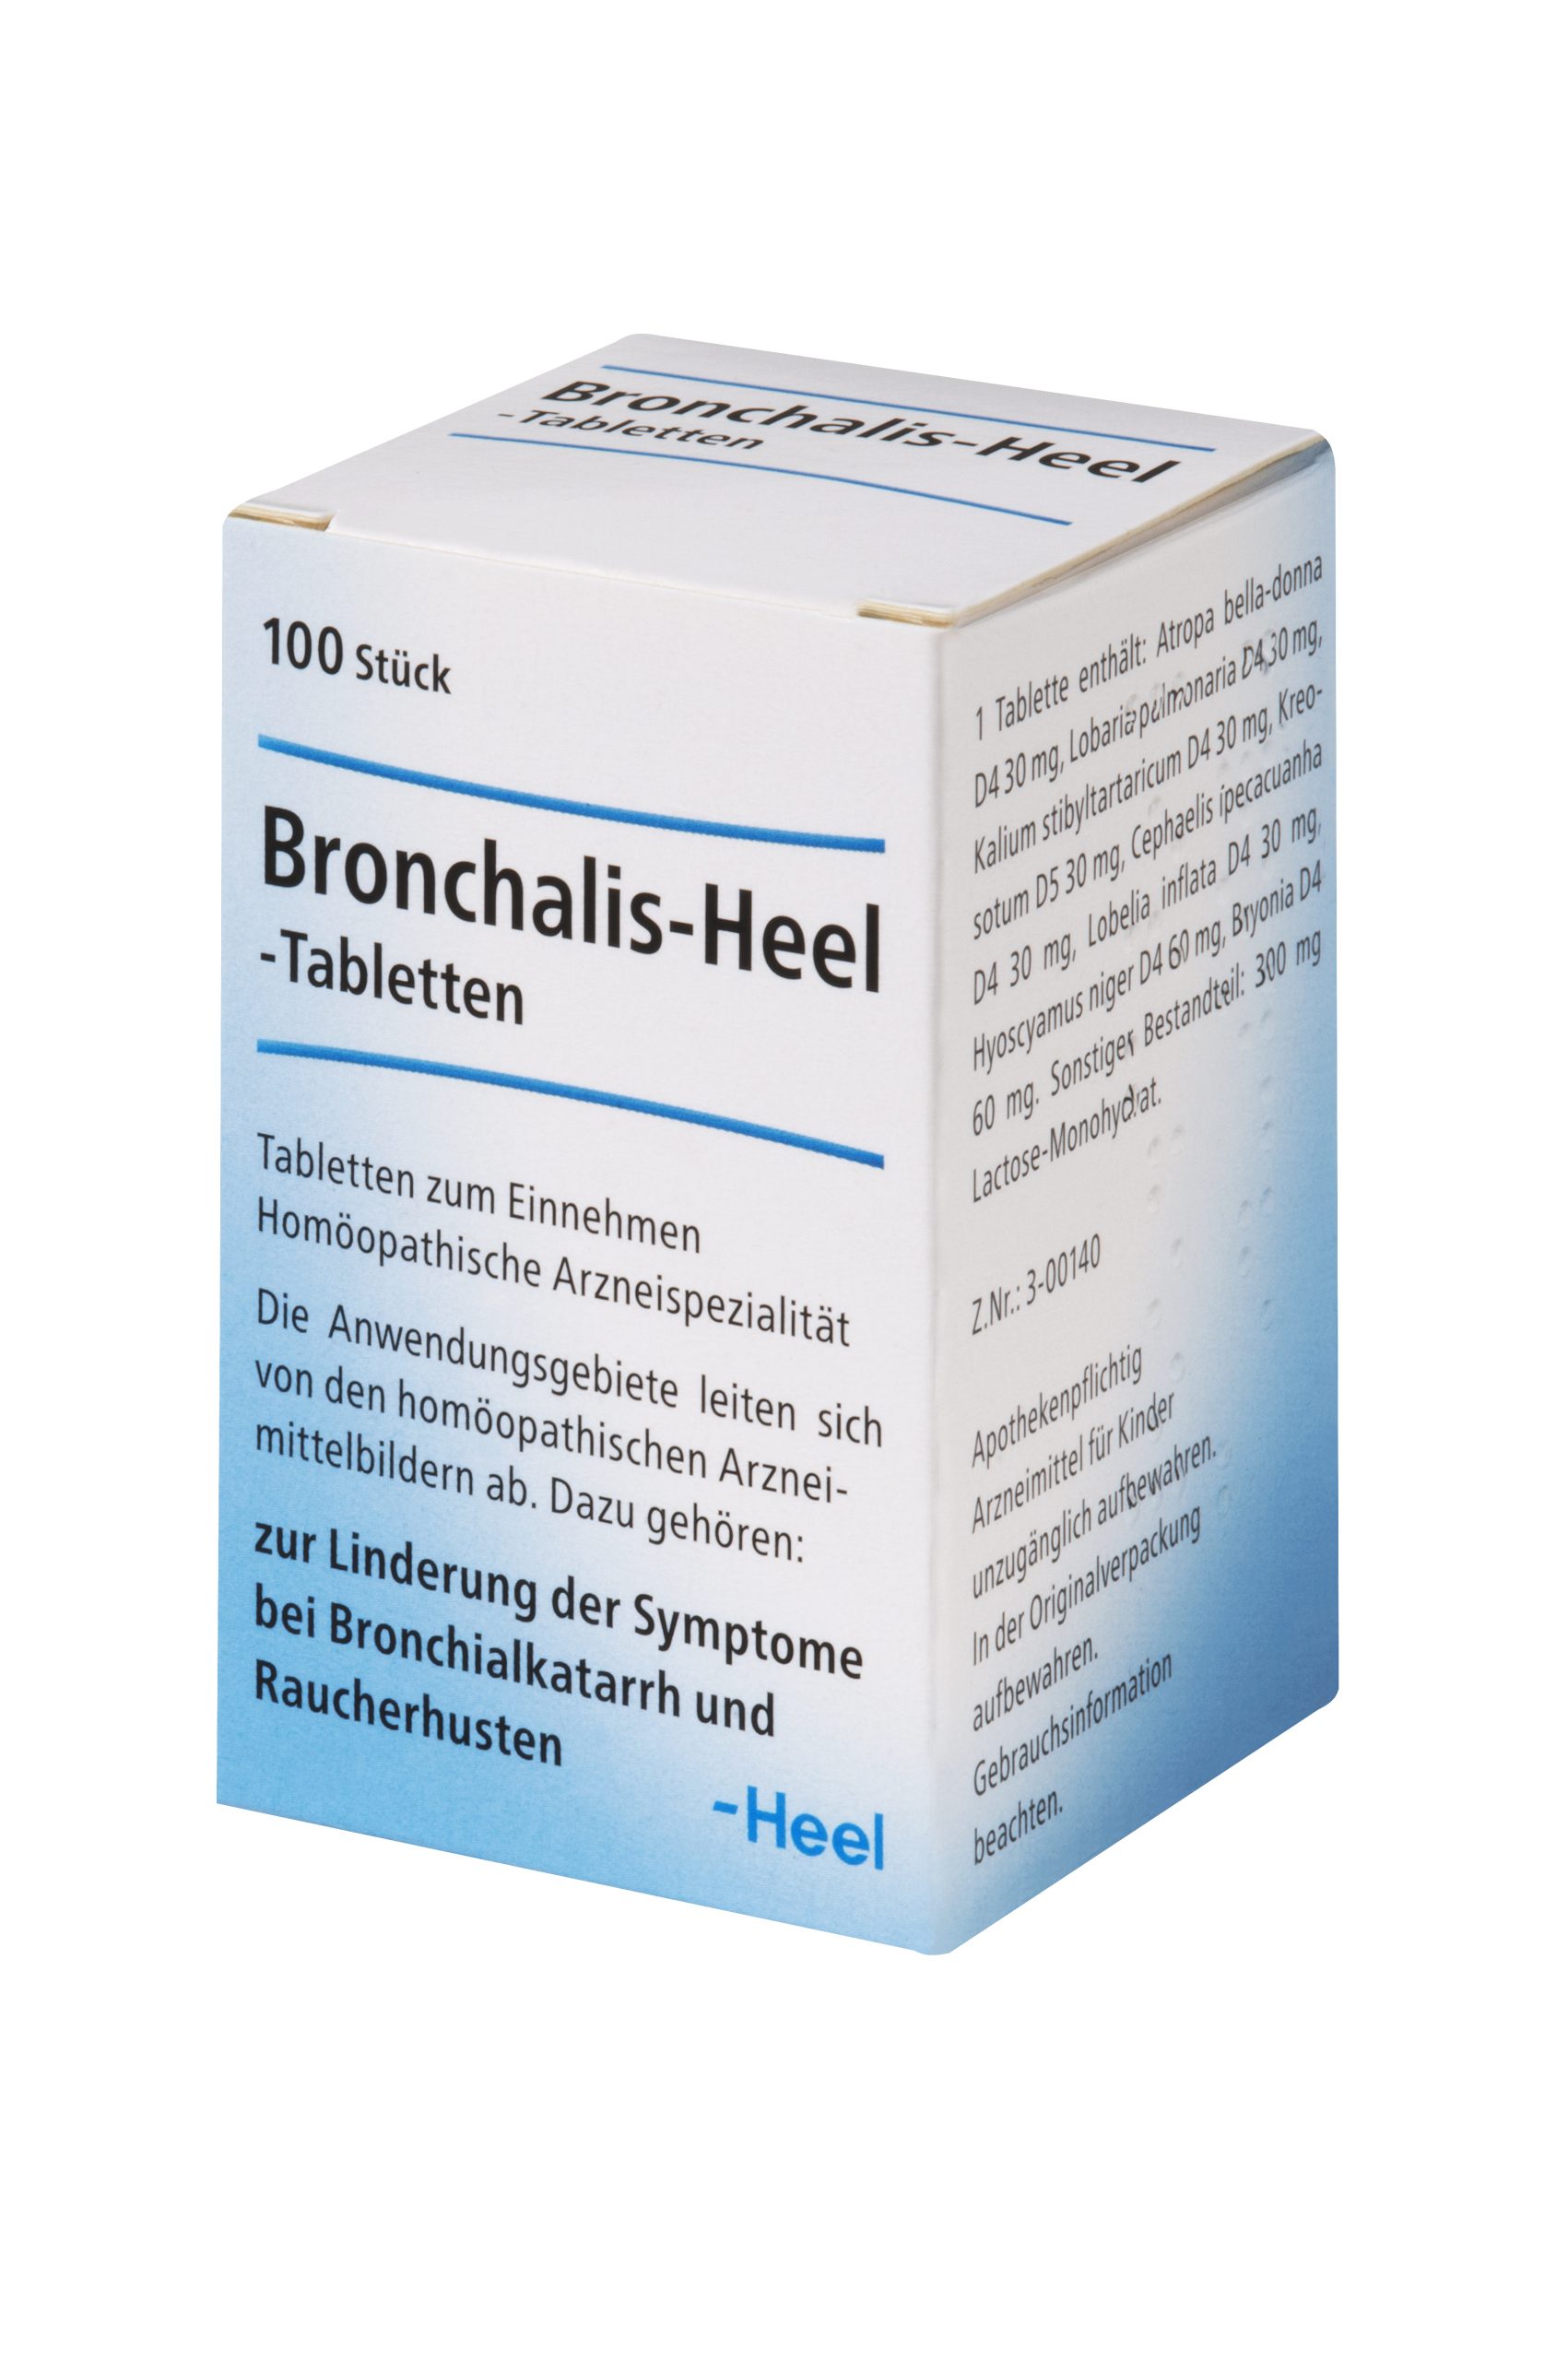 Bronchialis-Heel Packshot - © Brigitte Gradwohl